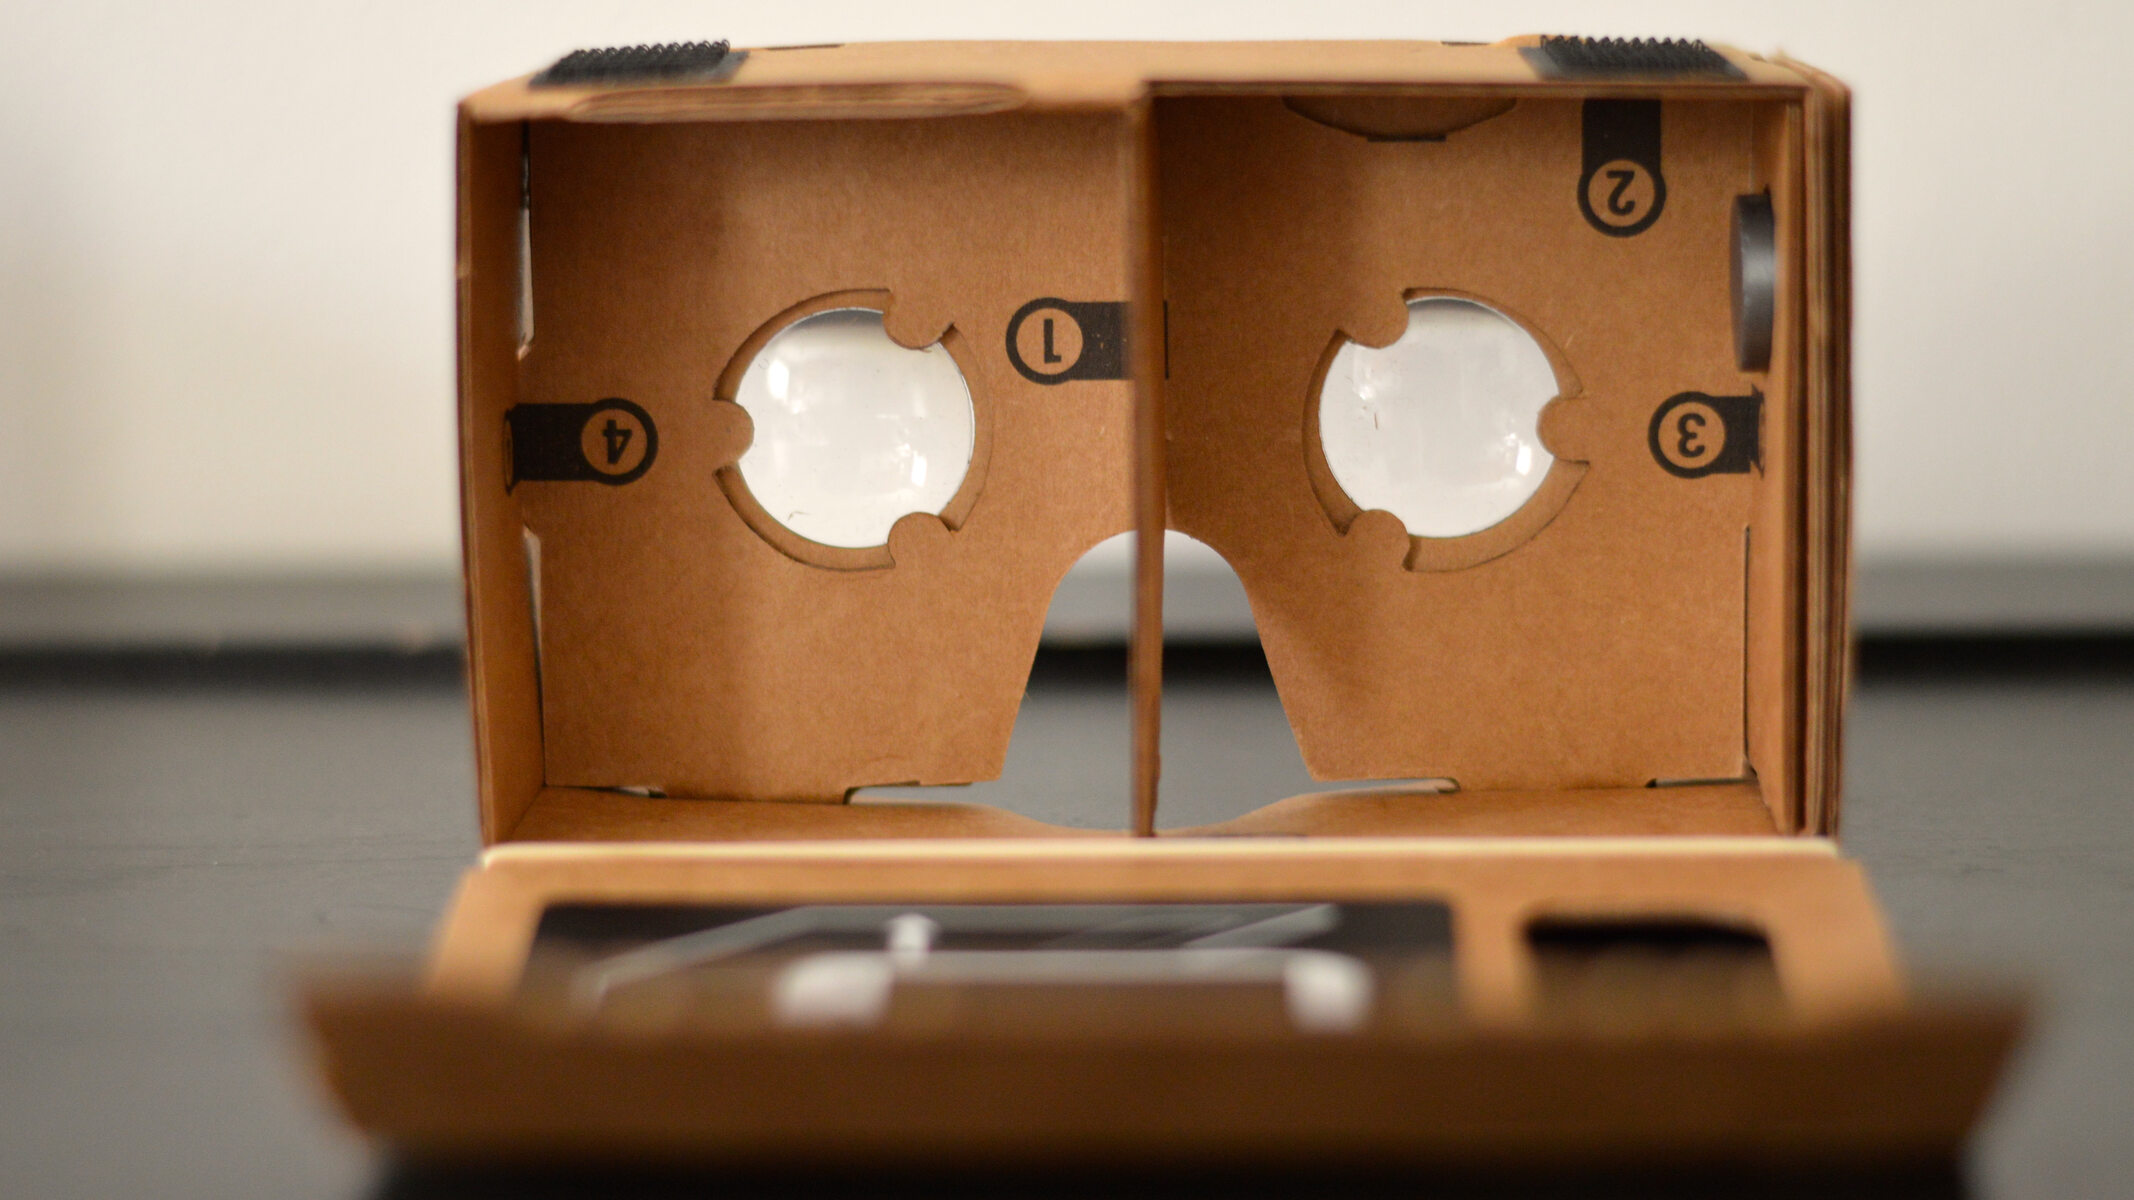 How To Make A Cardboard VR Headset